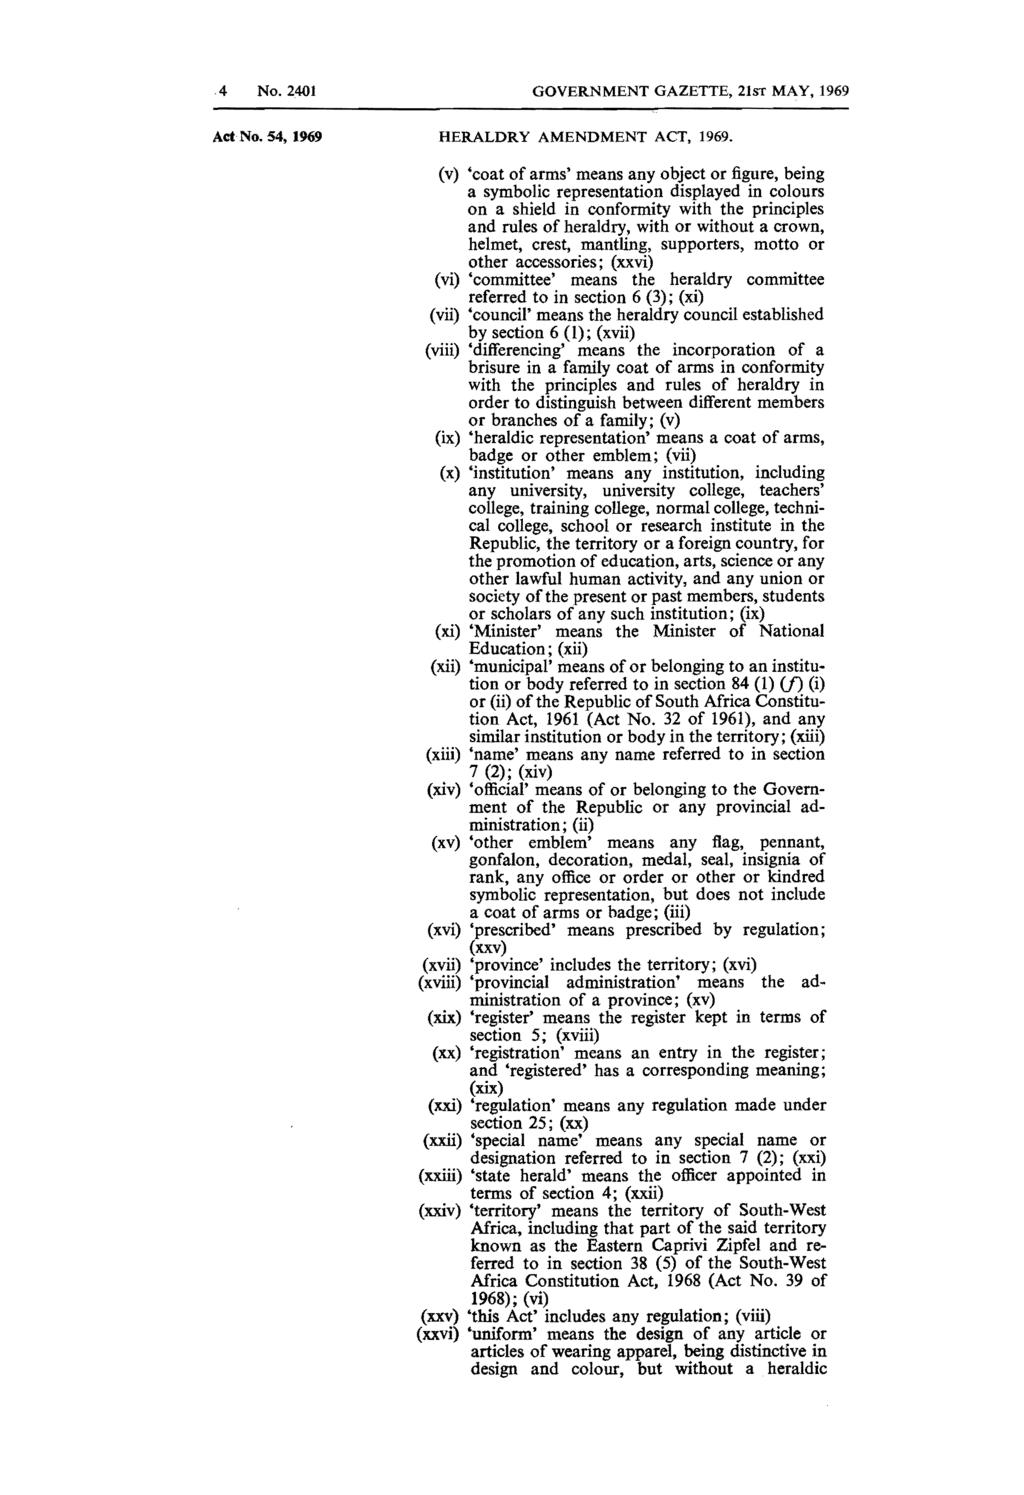 .4 No. 2401 GOVERNMENT GAZETTE, 21sT MAY, 1969 Act No. 54, 1969 HERALDRY AMENDMENT ACT, 1969.